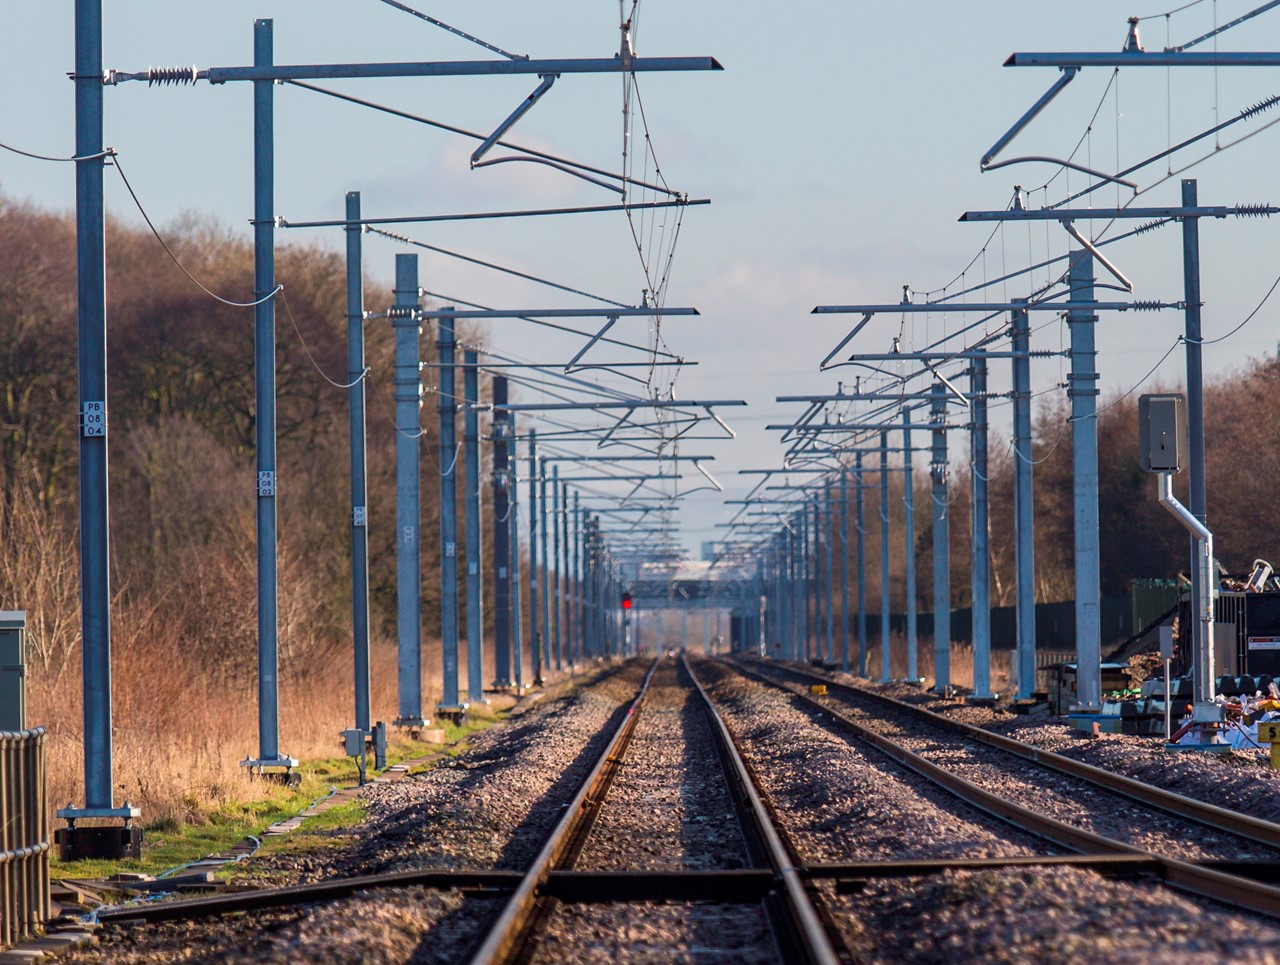 Buckled rail - Network Rail